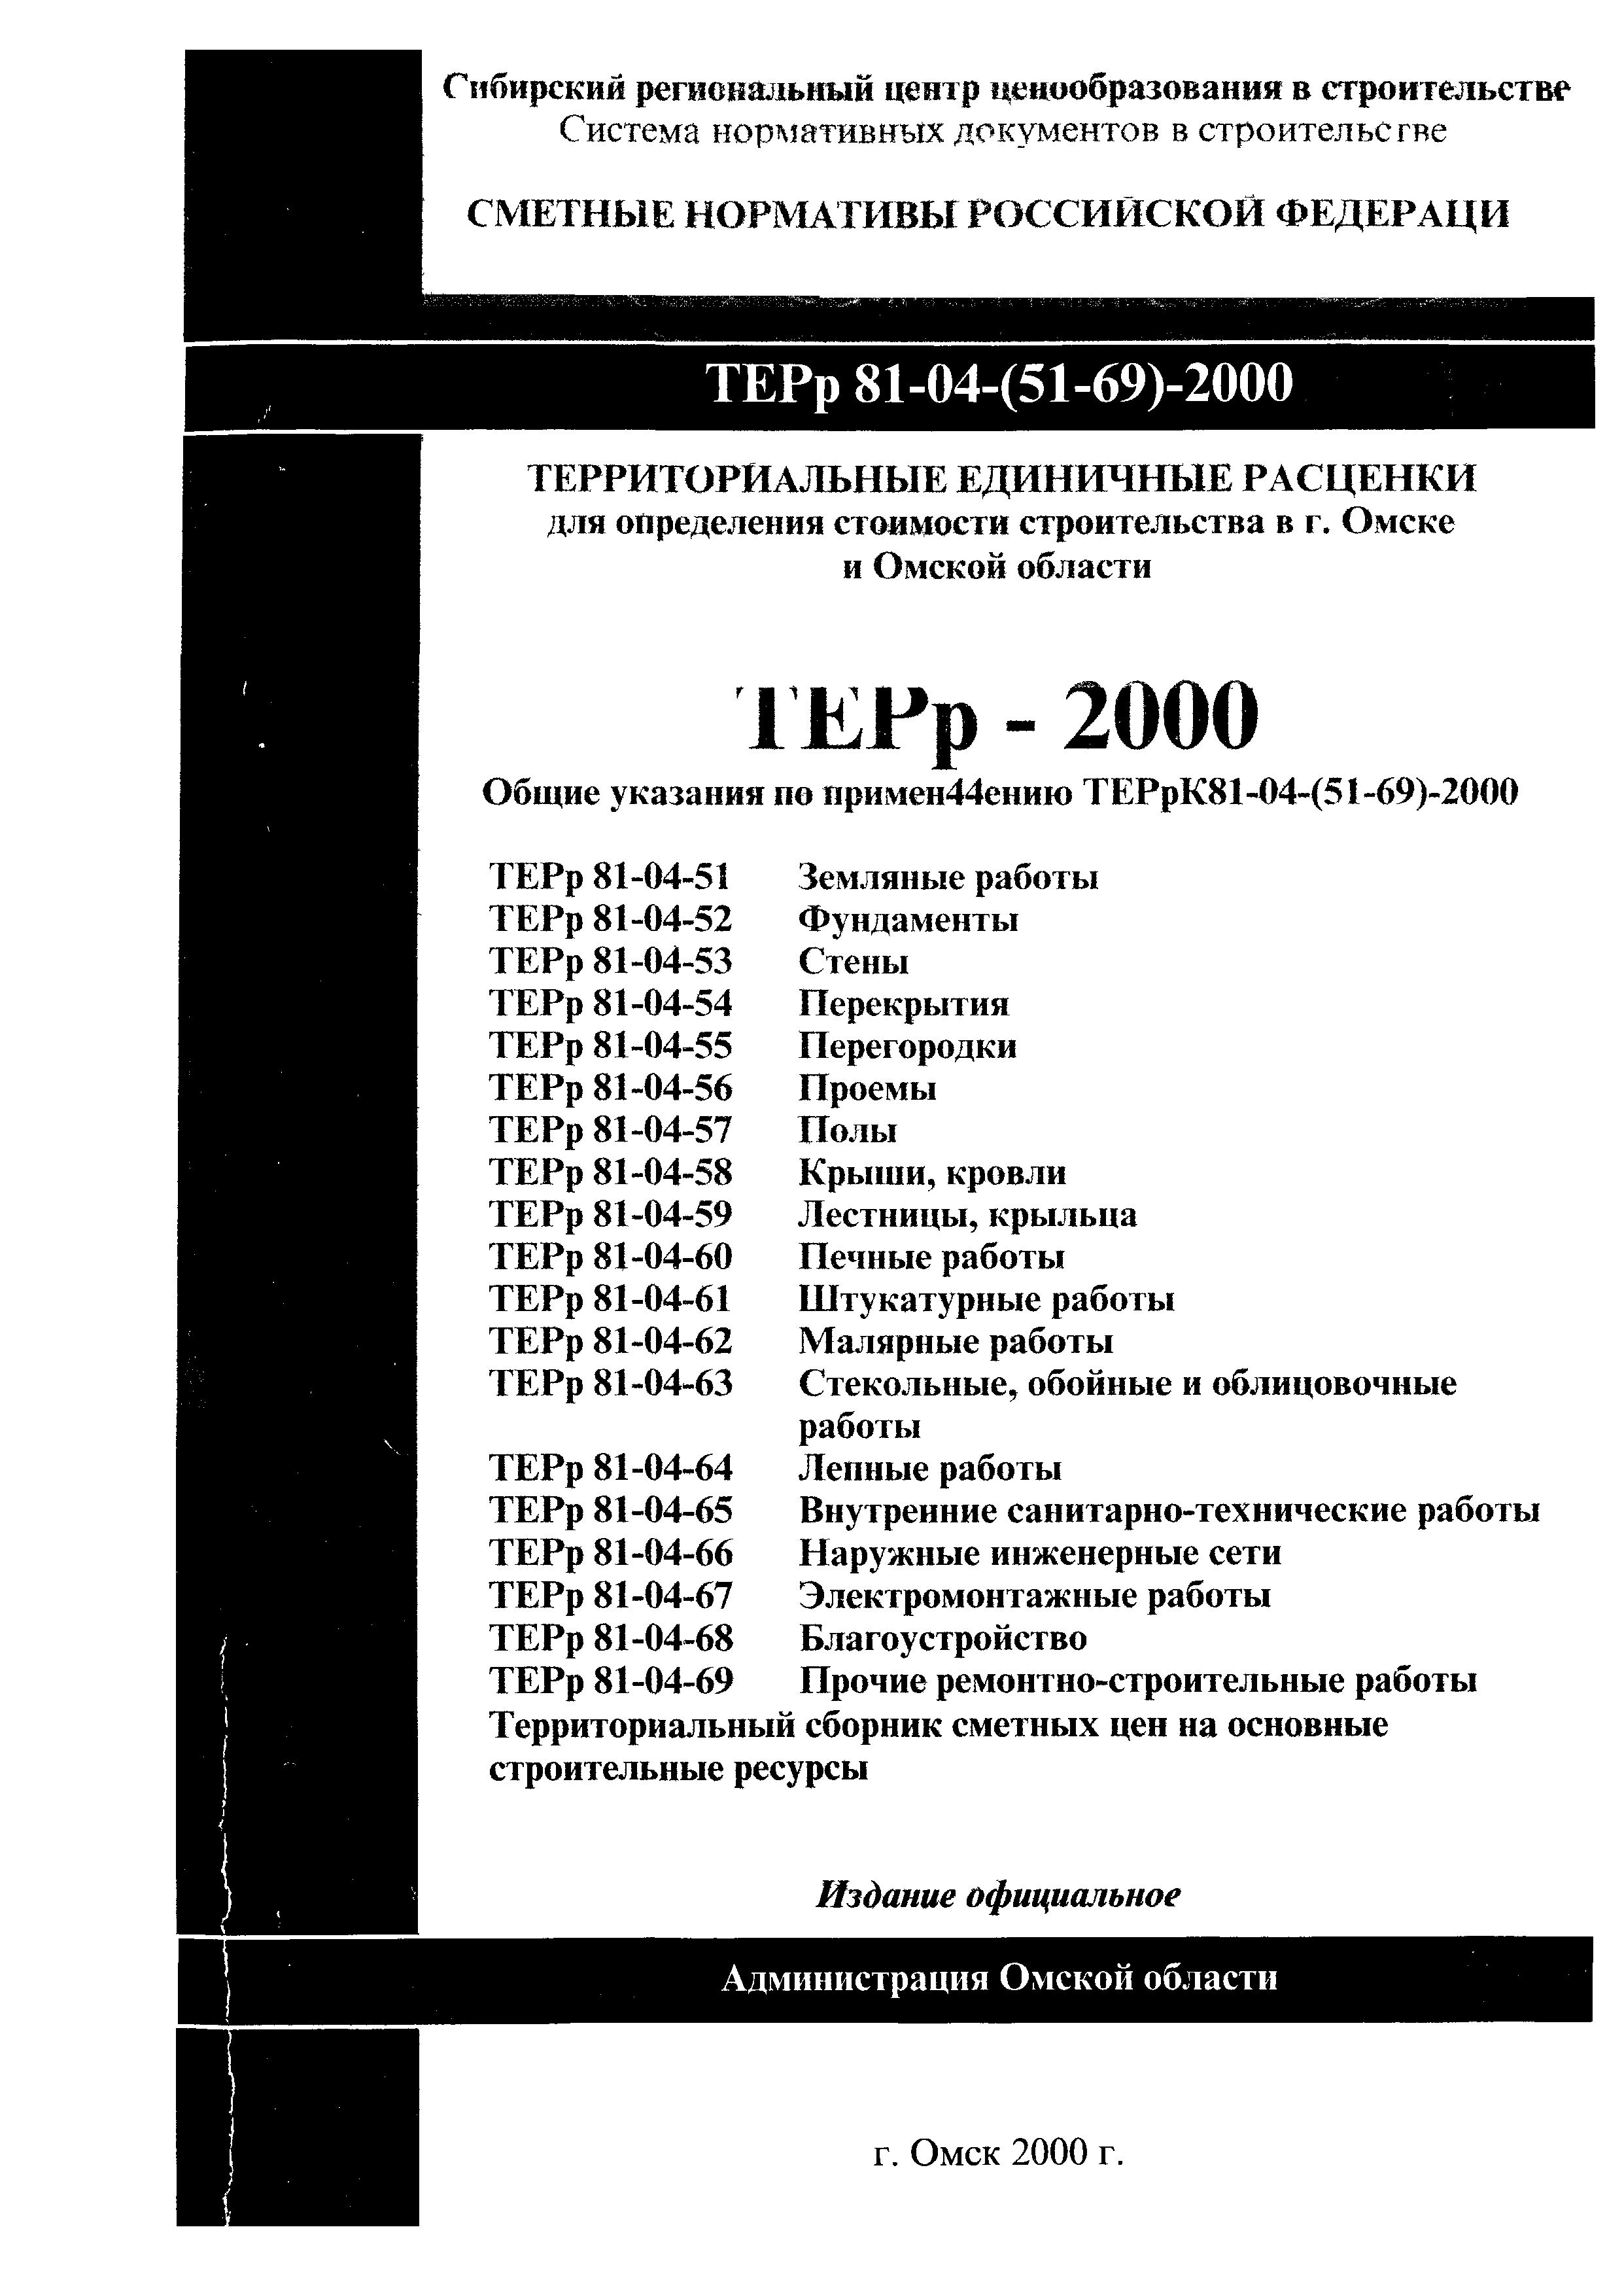 ТЕРр Омской области 2000-59